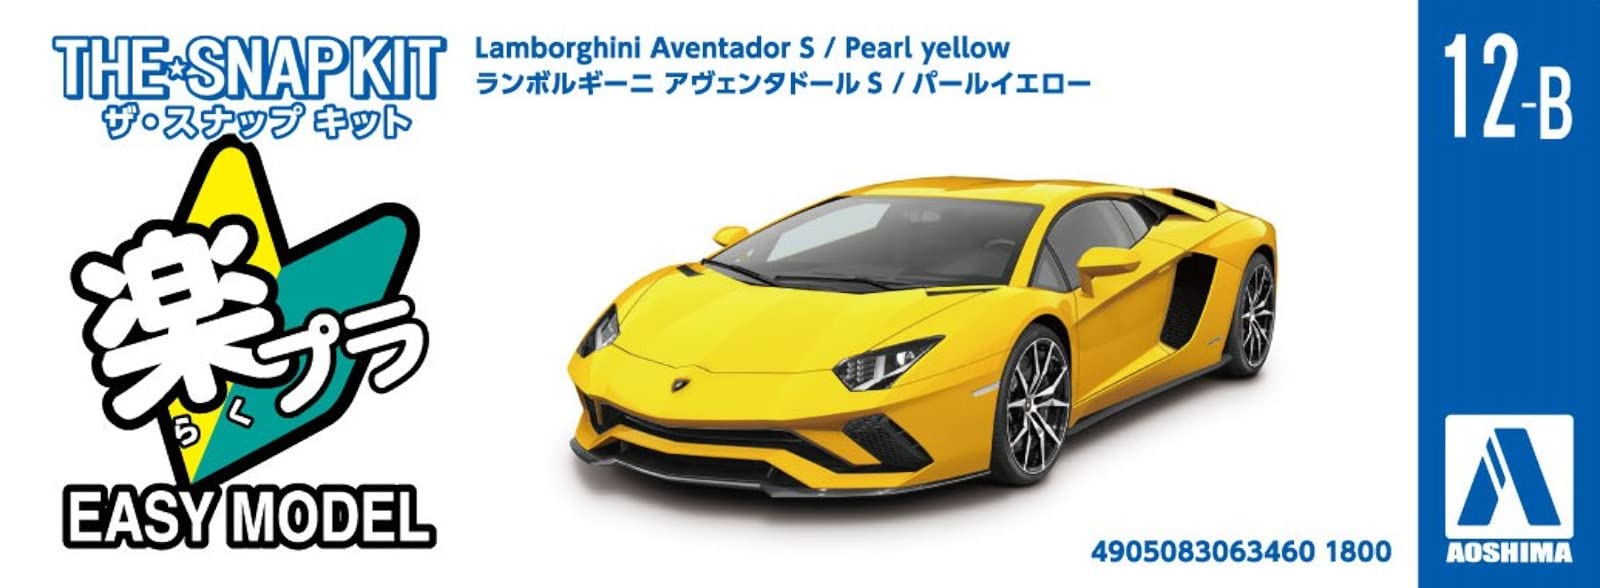 AOSHIMA The Snap Kit No.12-B 1/32 Lamborghini Aventador S Perlgelbes Kunststoffmodell